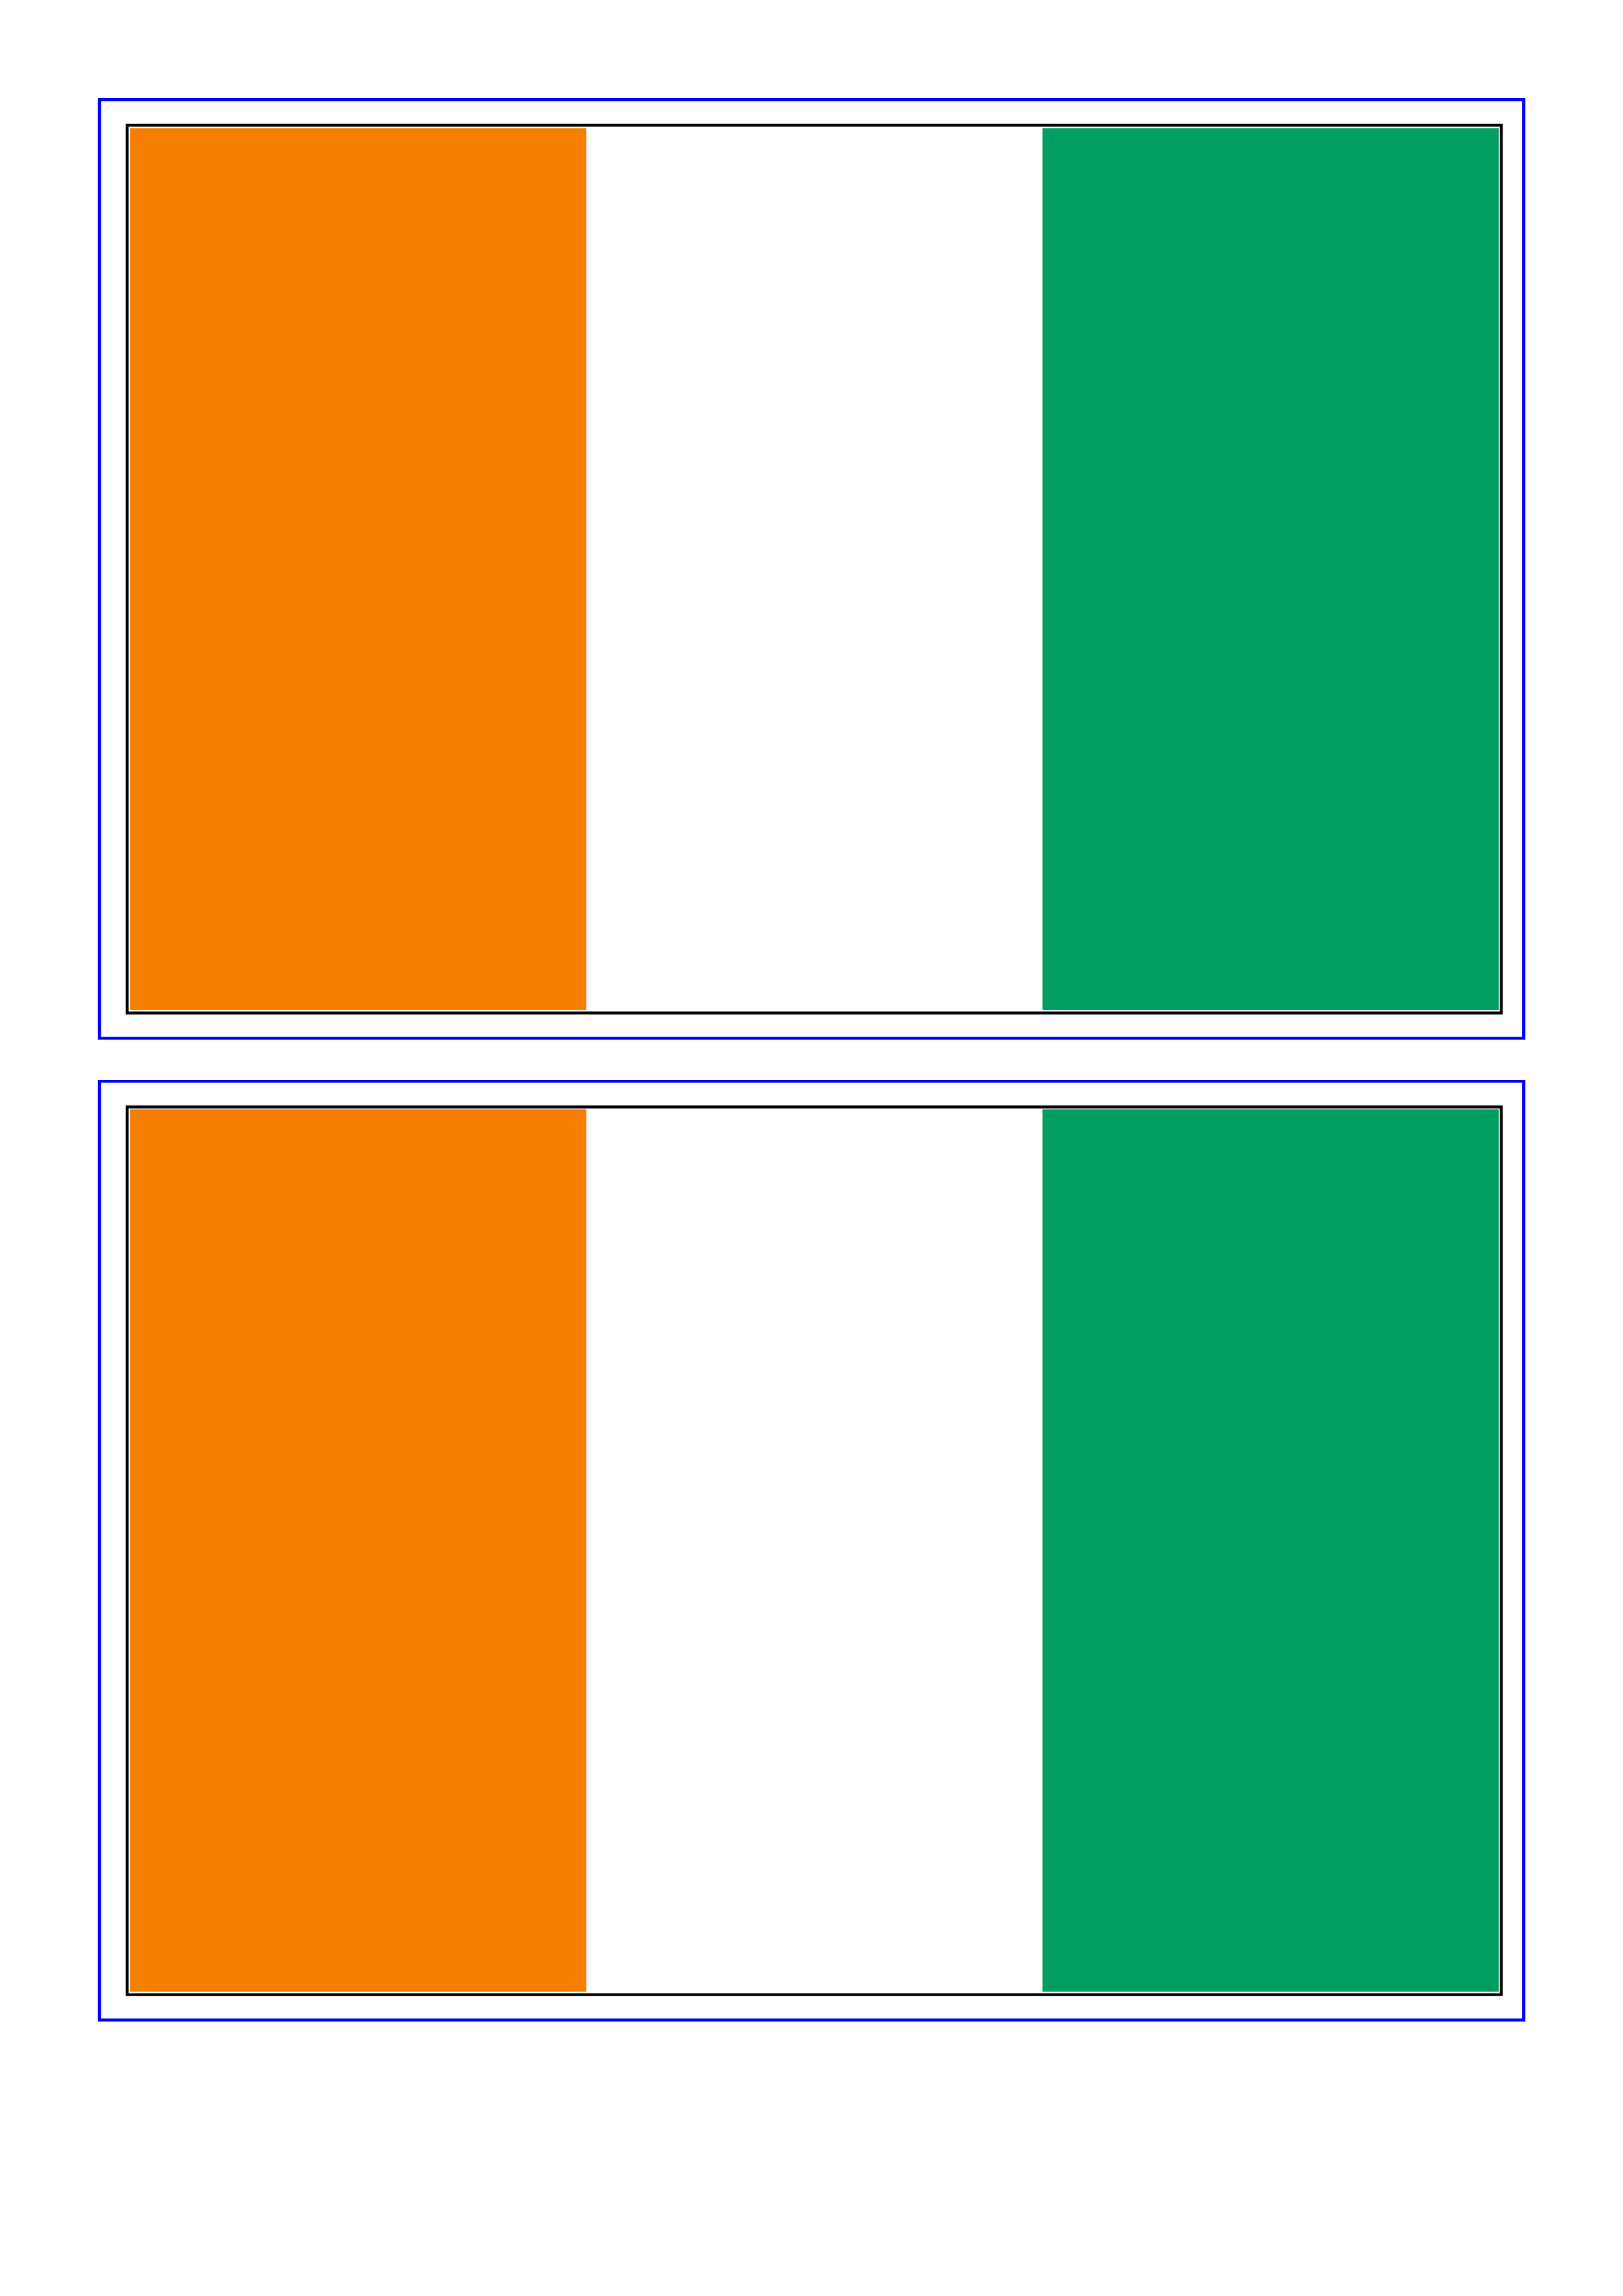 ivory coast flag template voorbeeld afbeelding 